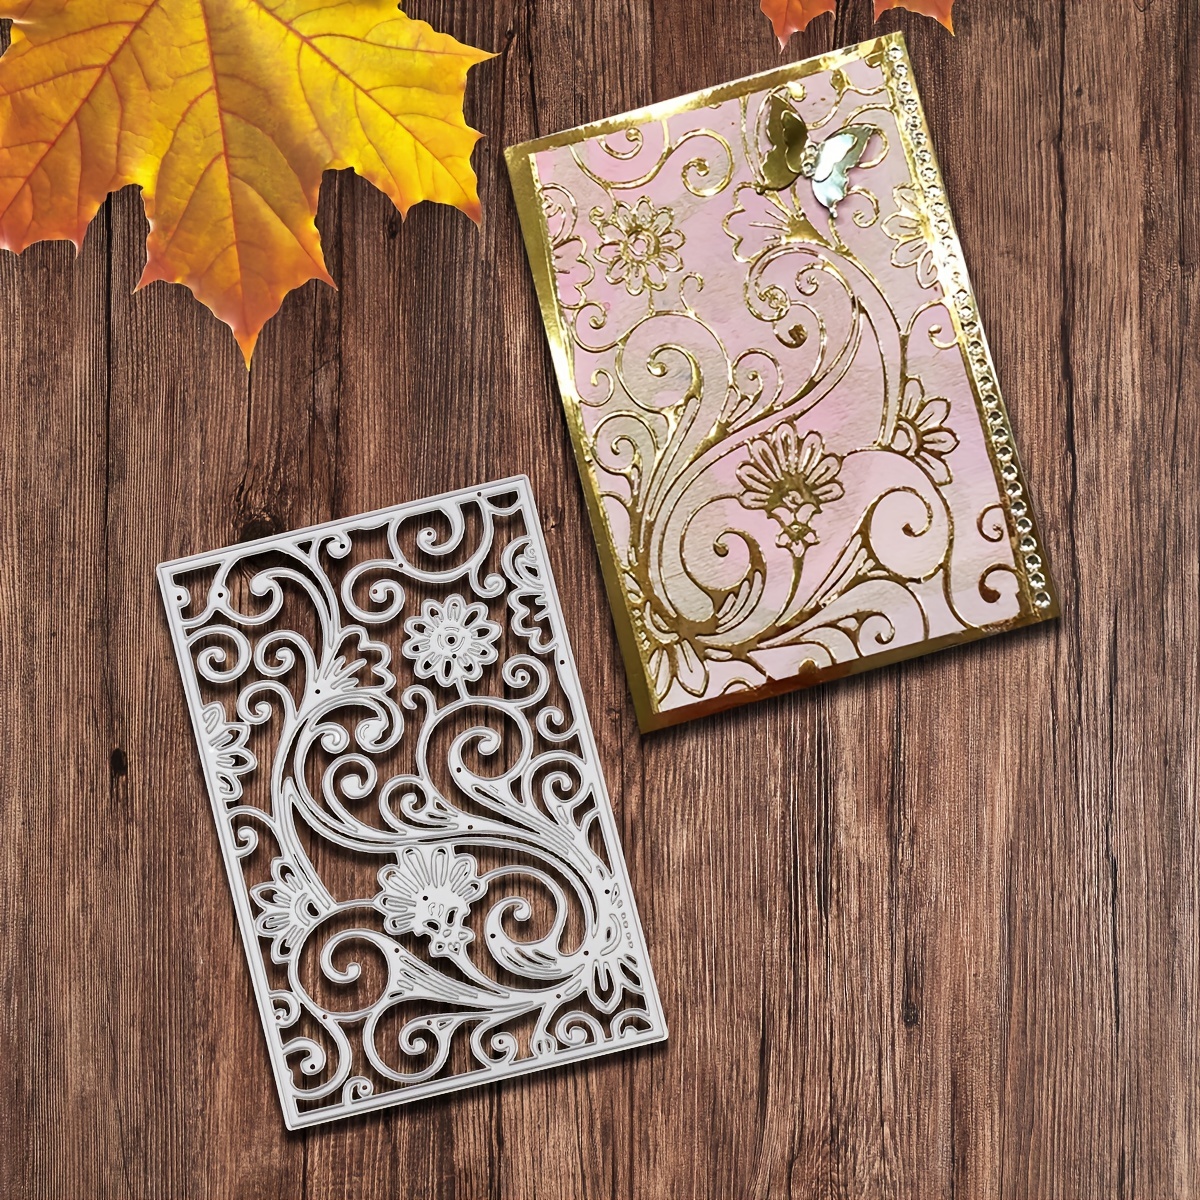 

Diy Greeting Card Making Kit: Metal Cutting Die, Background Flowers, Embossing Stencils & More - Perfect For Crafting Handmade Holiday Cards! Eid Al-adha Mubarak